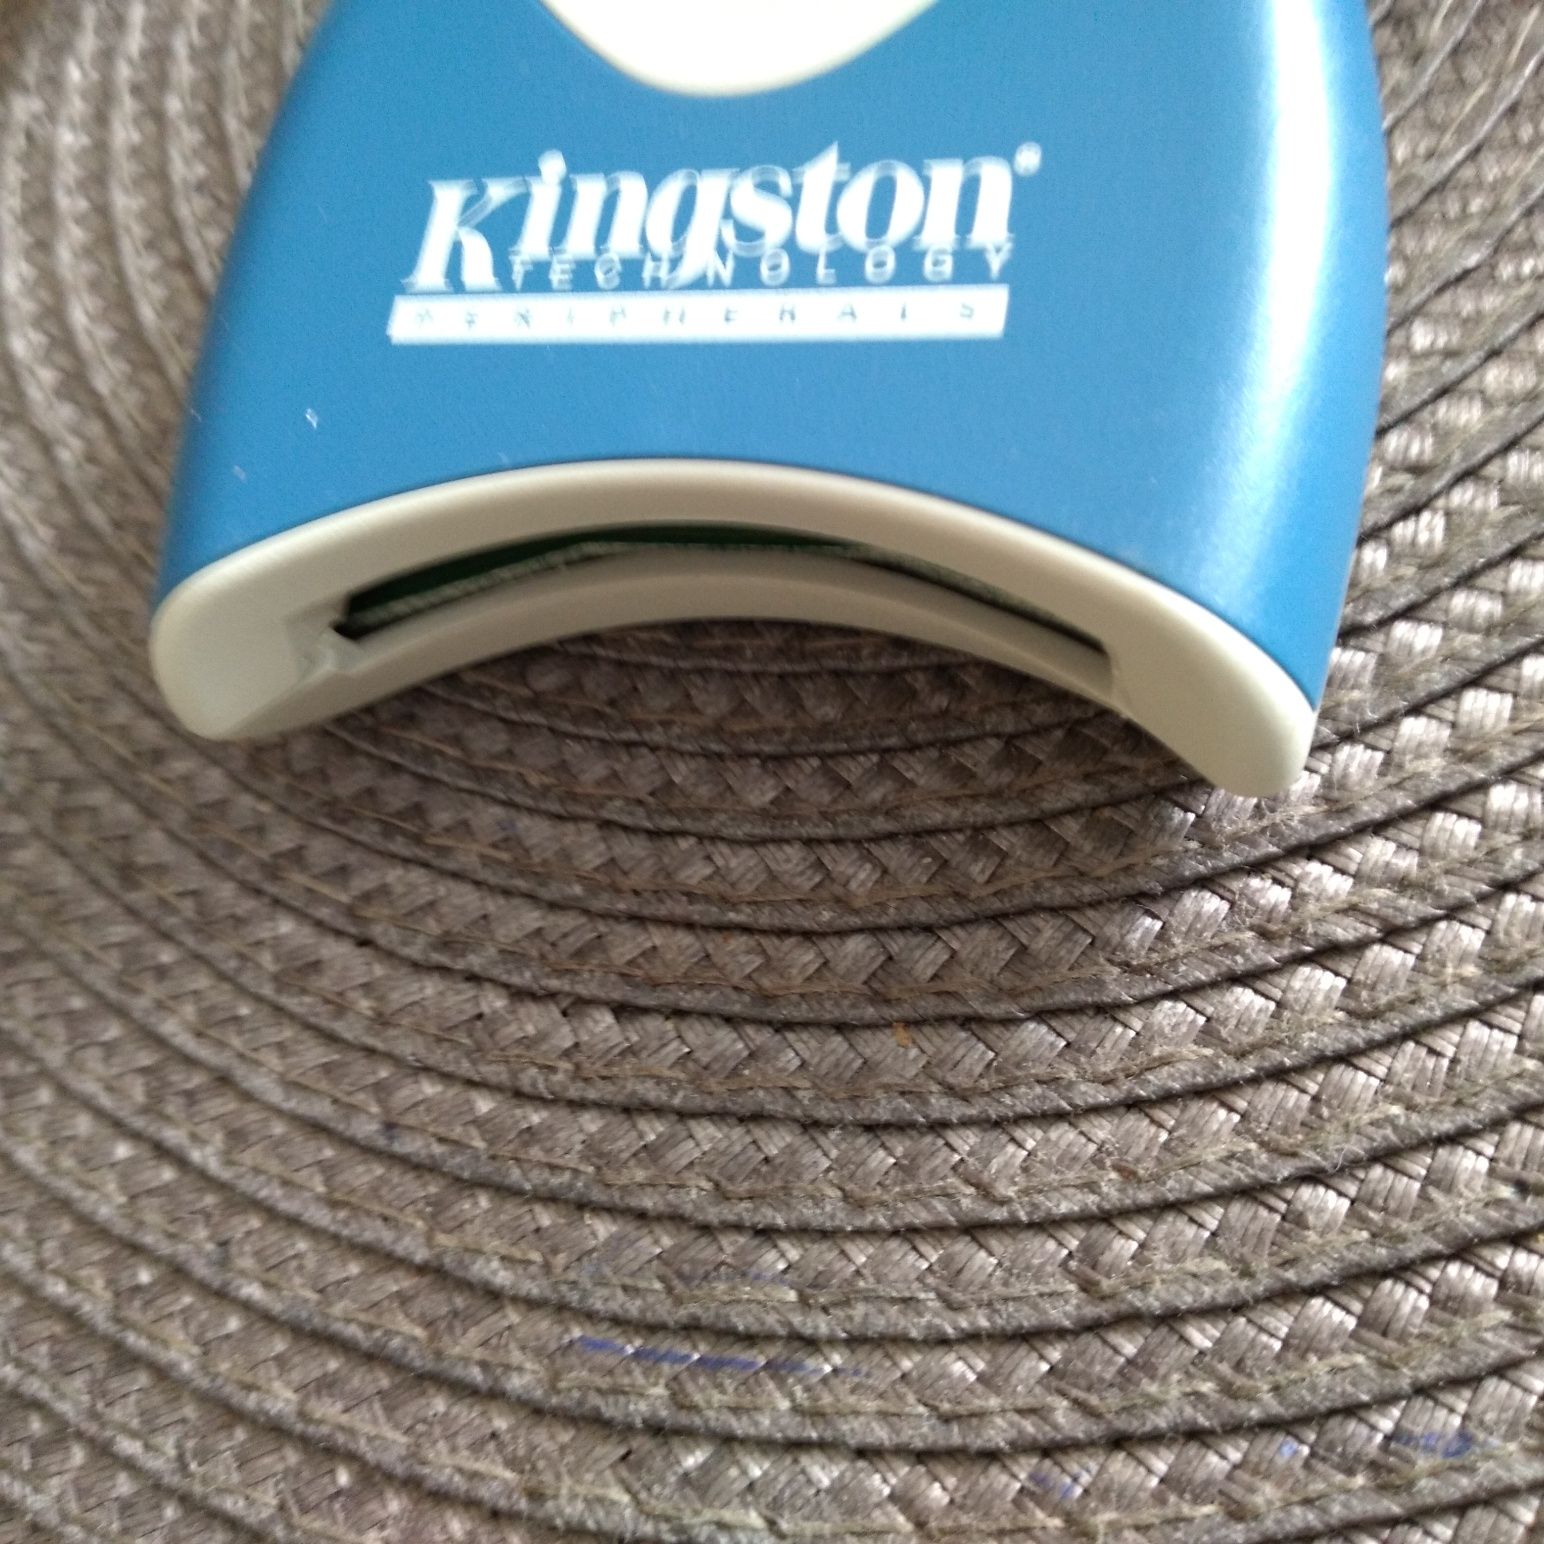 Kingston peripherals pcread-usb/cf